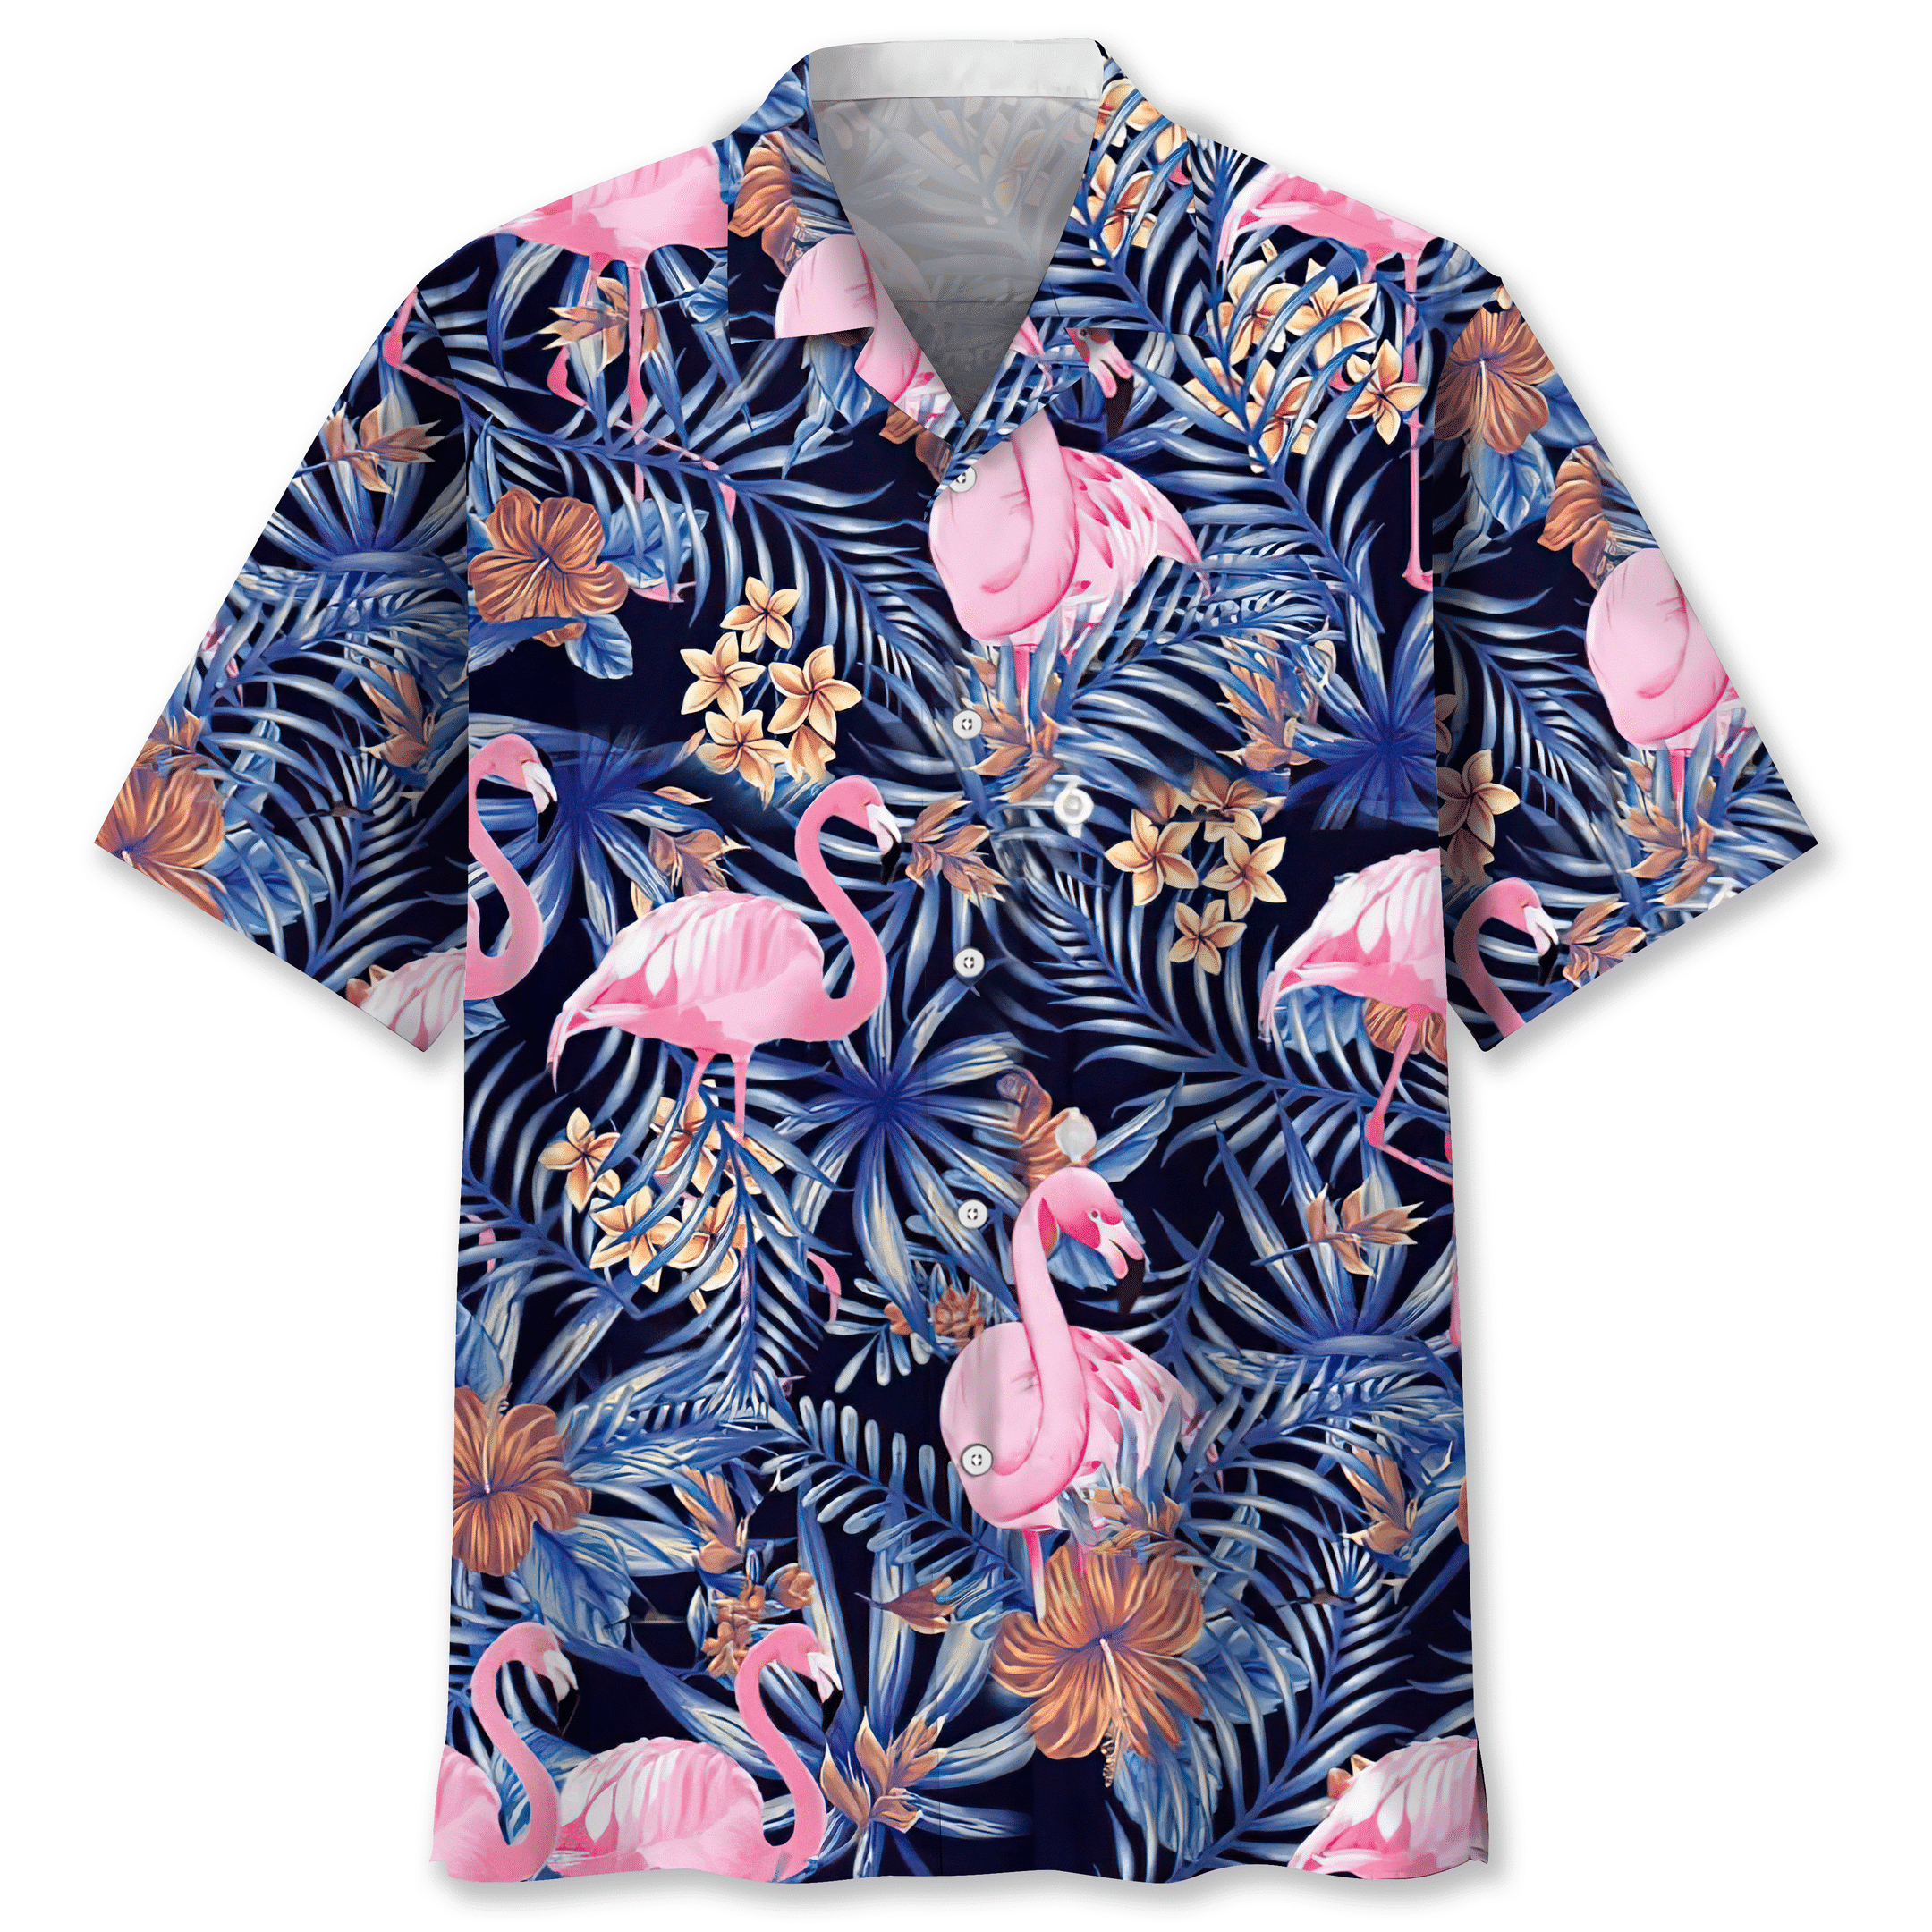 Flamingo Tropical Hawaiian Shirt/ Short Sleeve Summer Vacation Beach Shirts for men